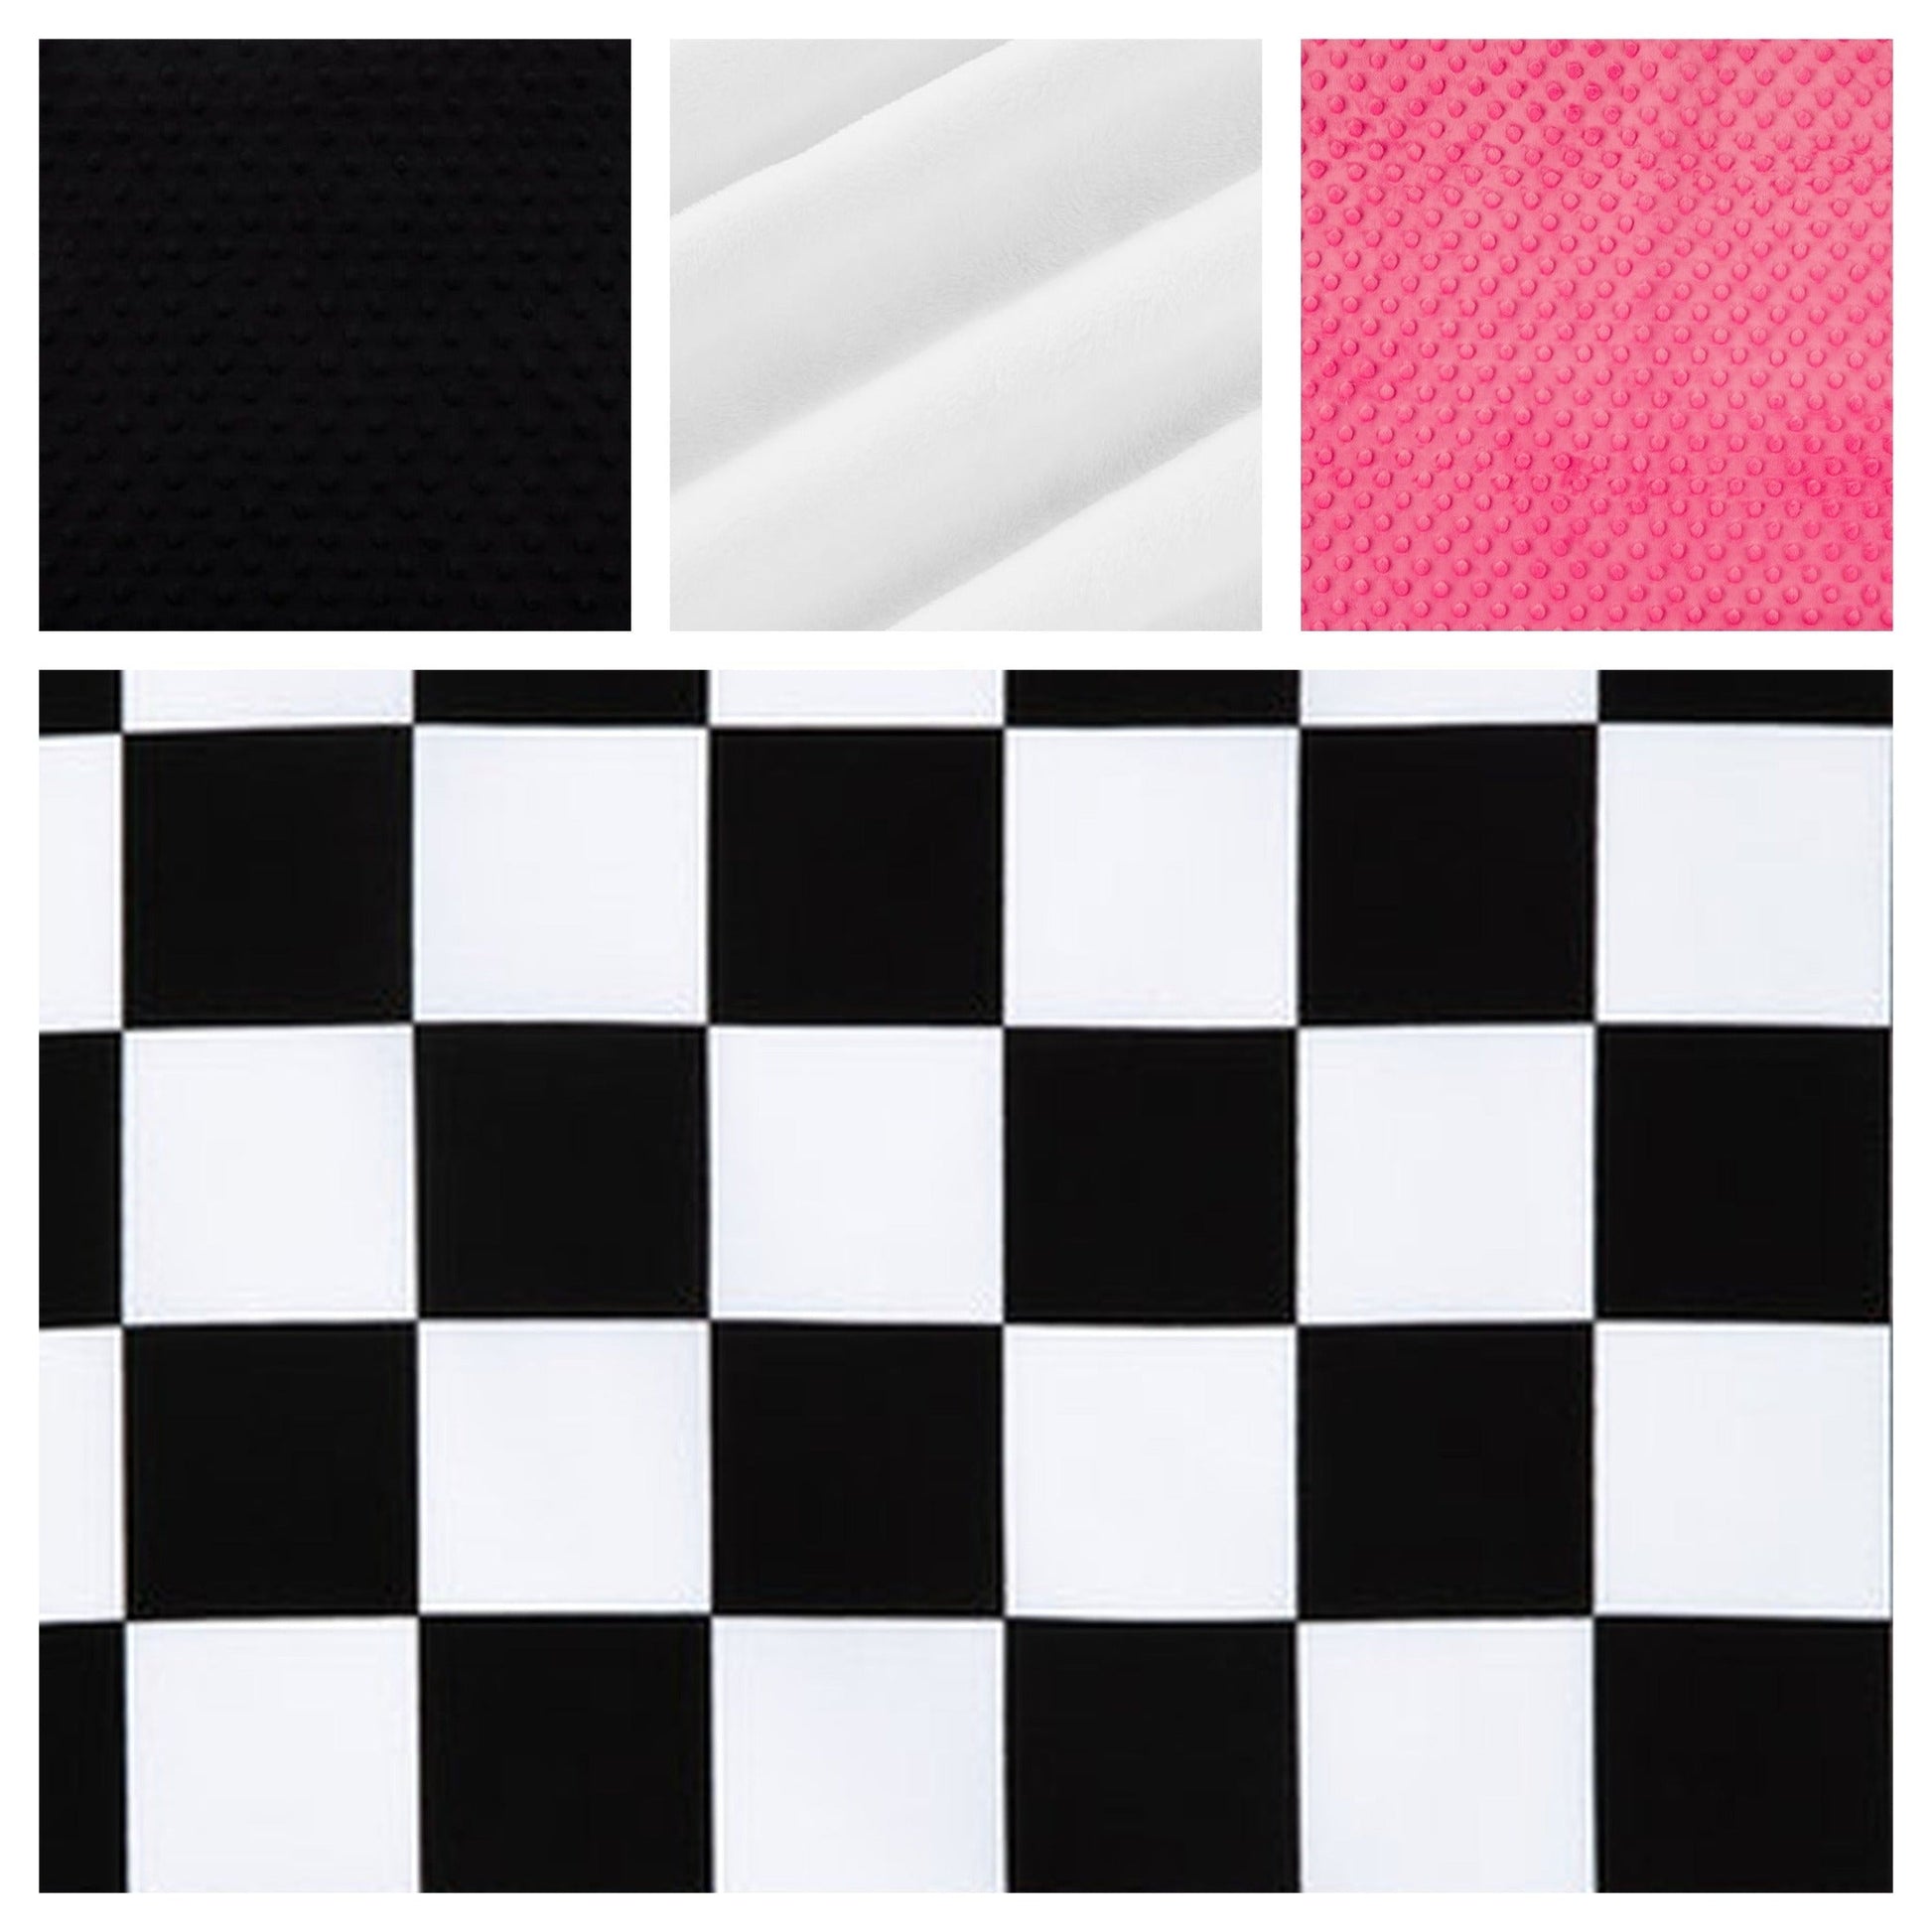 Racing Checkered Flag Blanket, Baby Girl Blanket Personalized - The Creative Raccoon